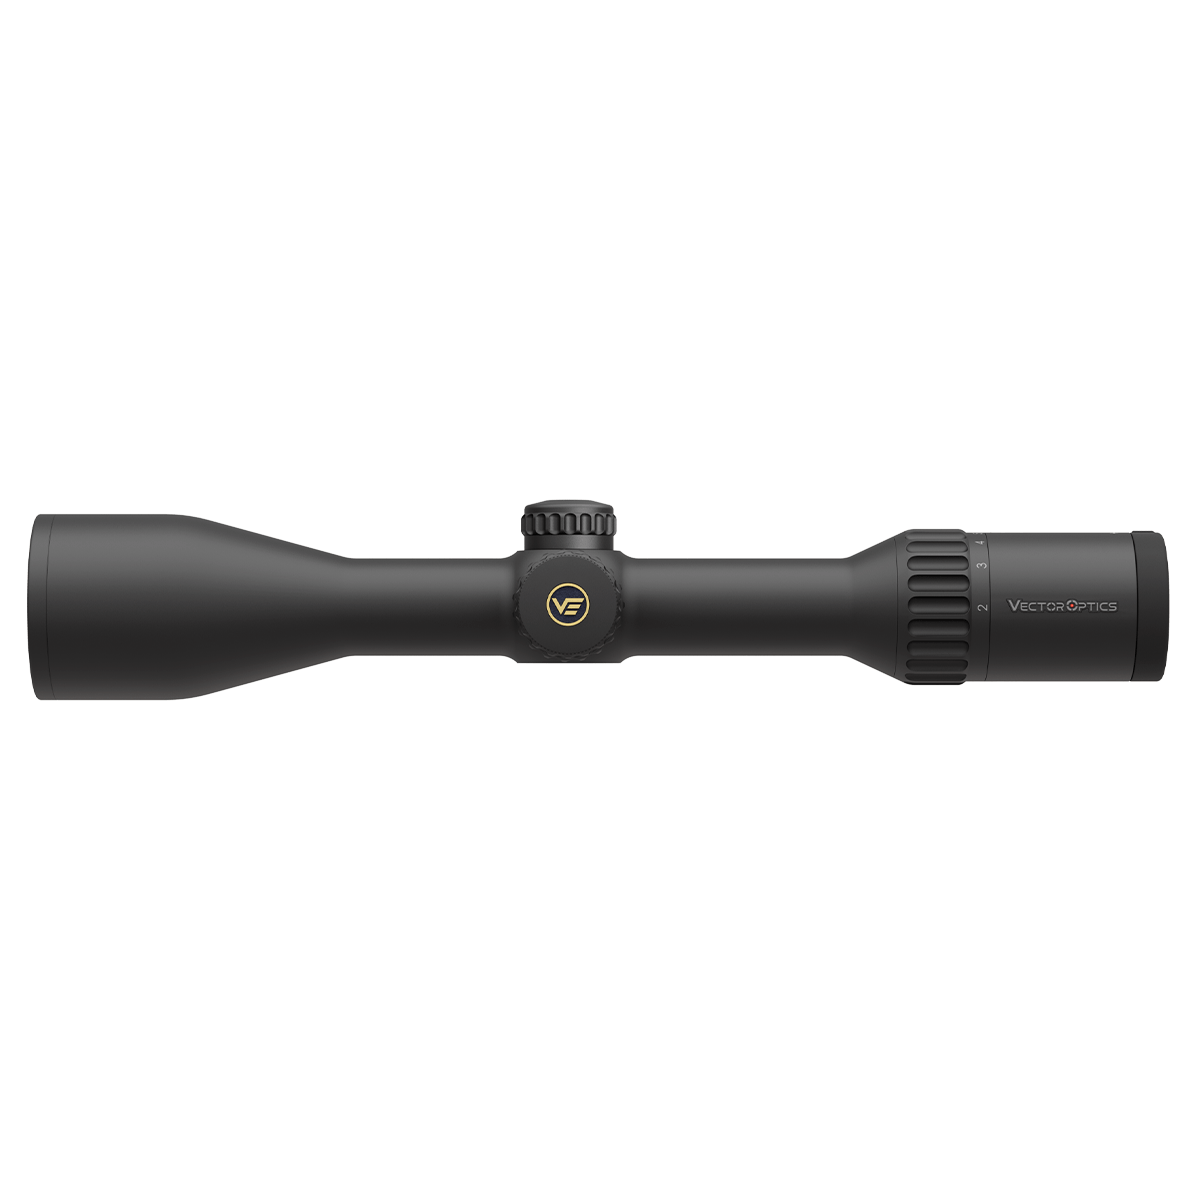 Continental x8 2-16x50 SFP ED Riflescope